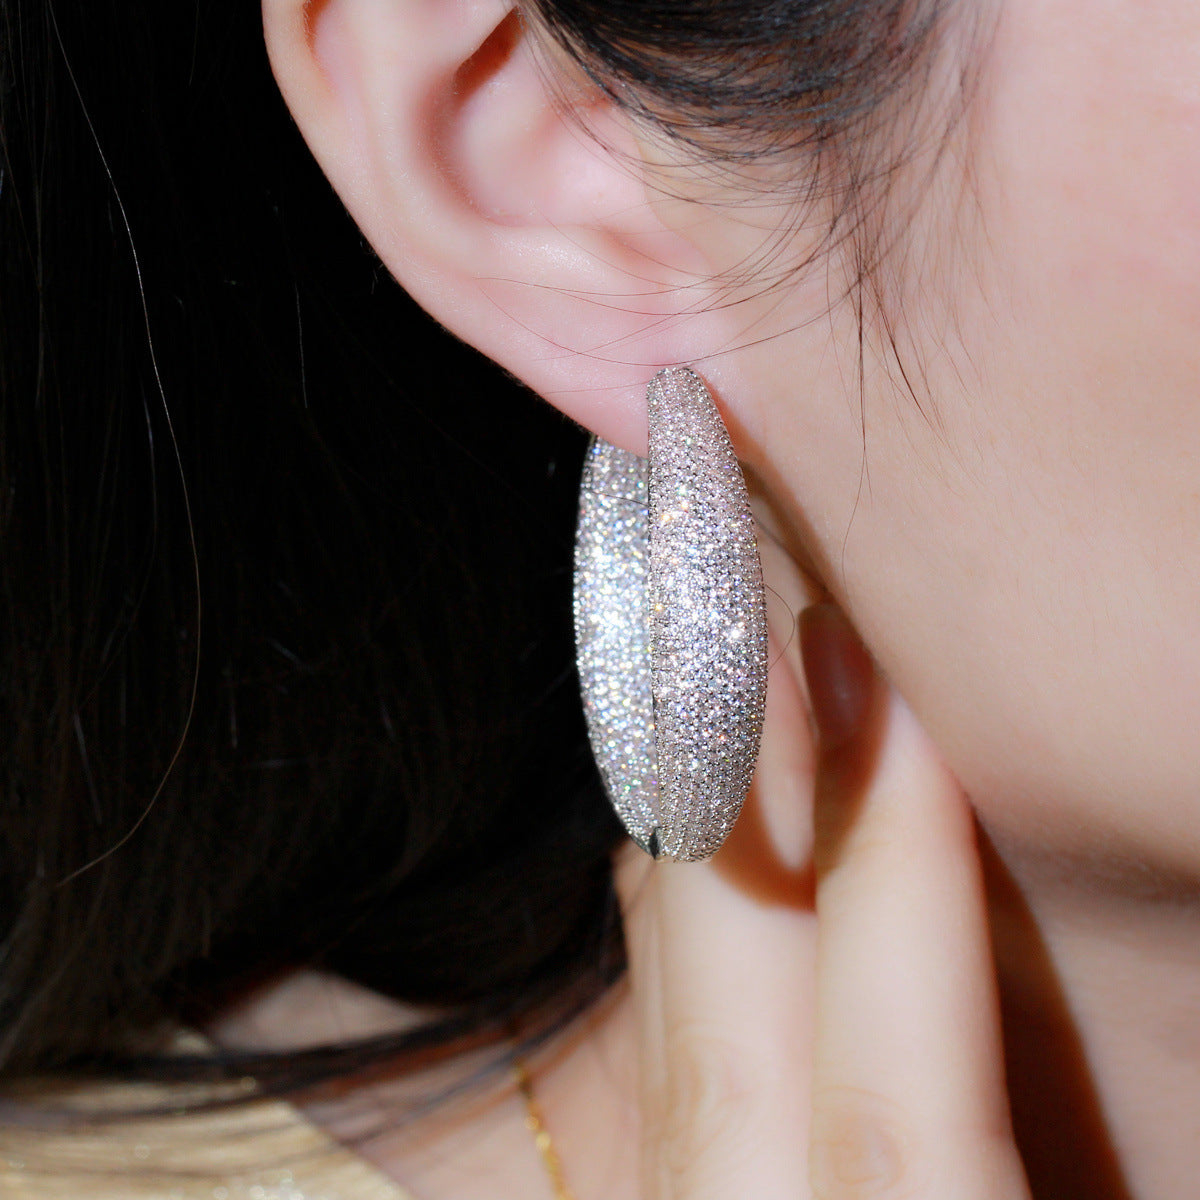 MiniLux "Como" golden earrings